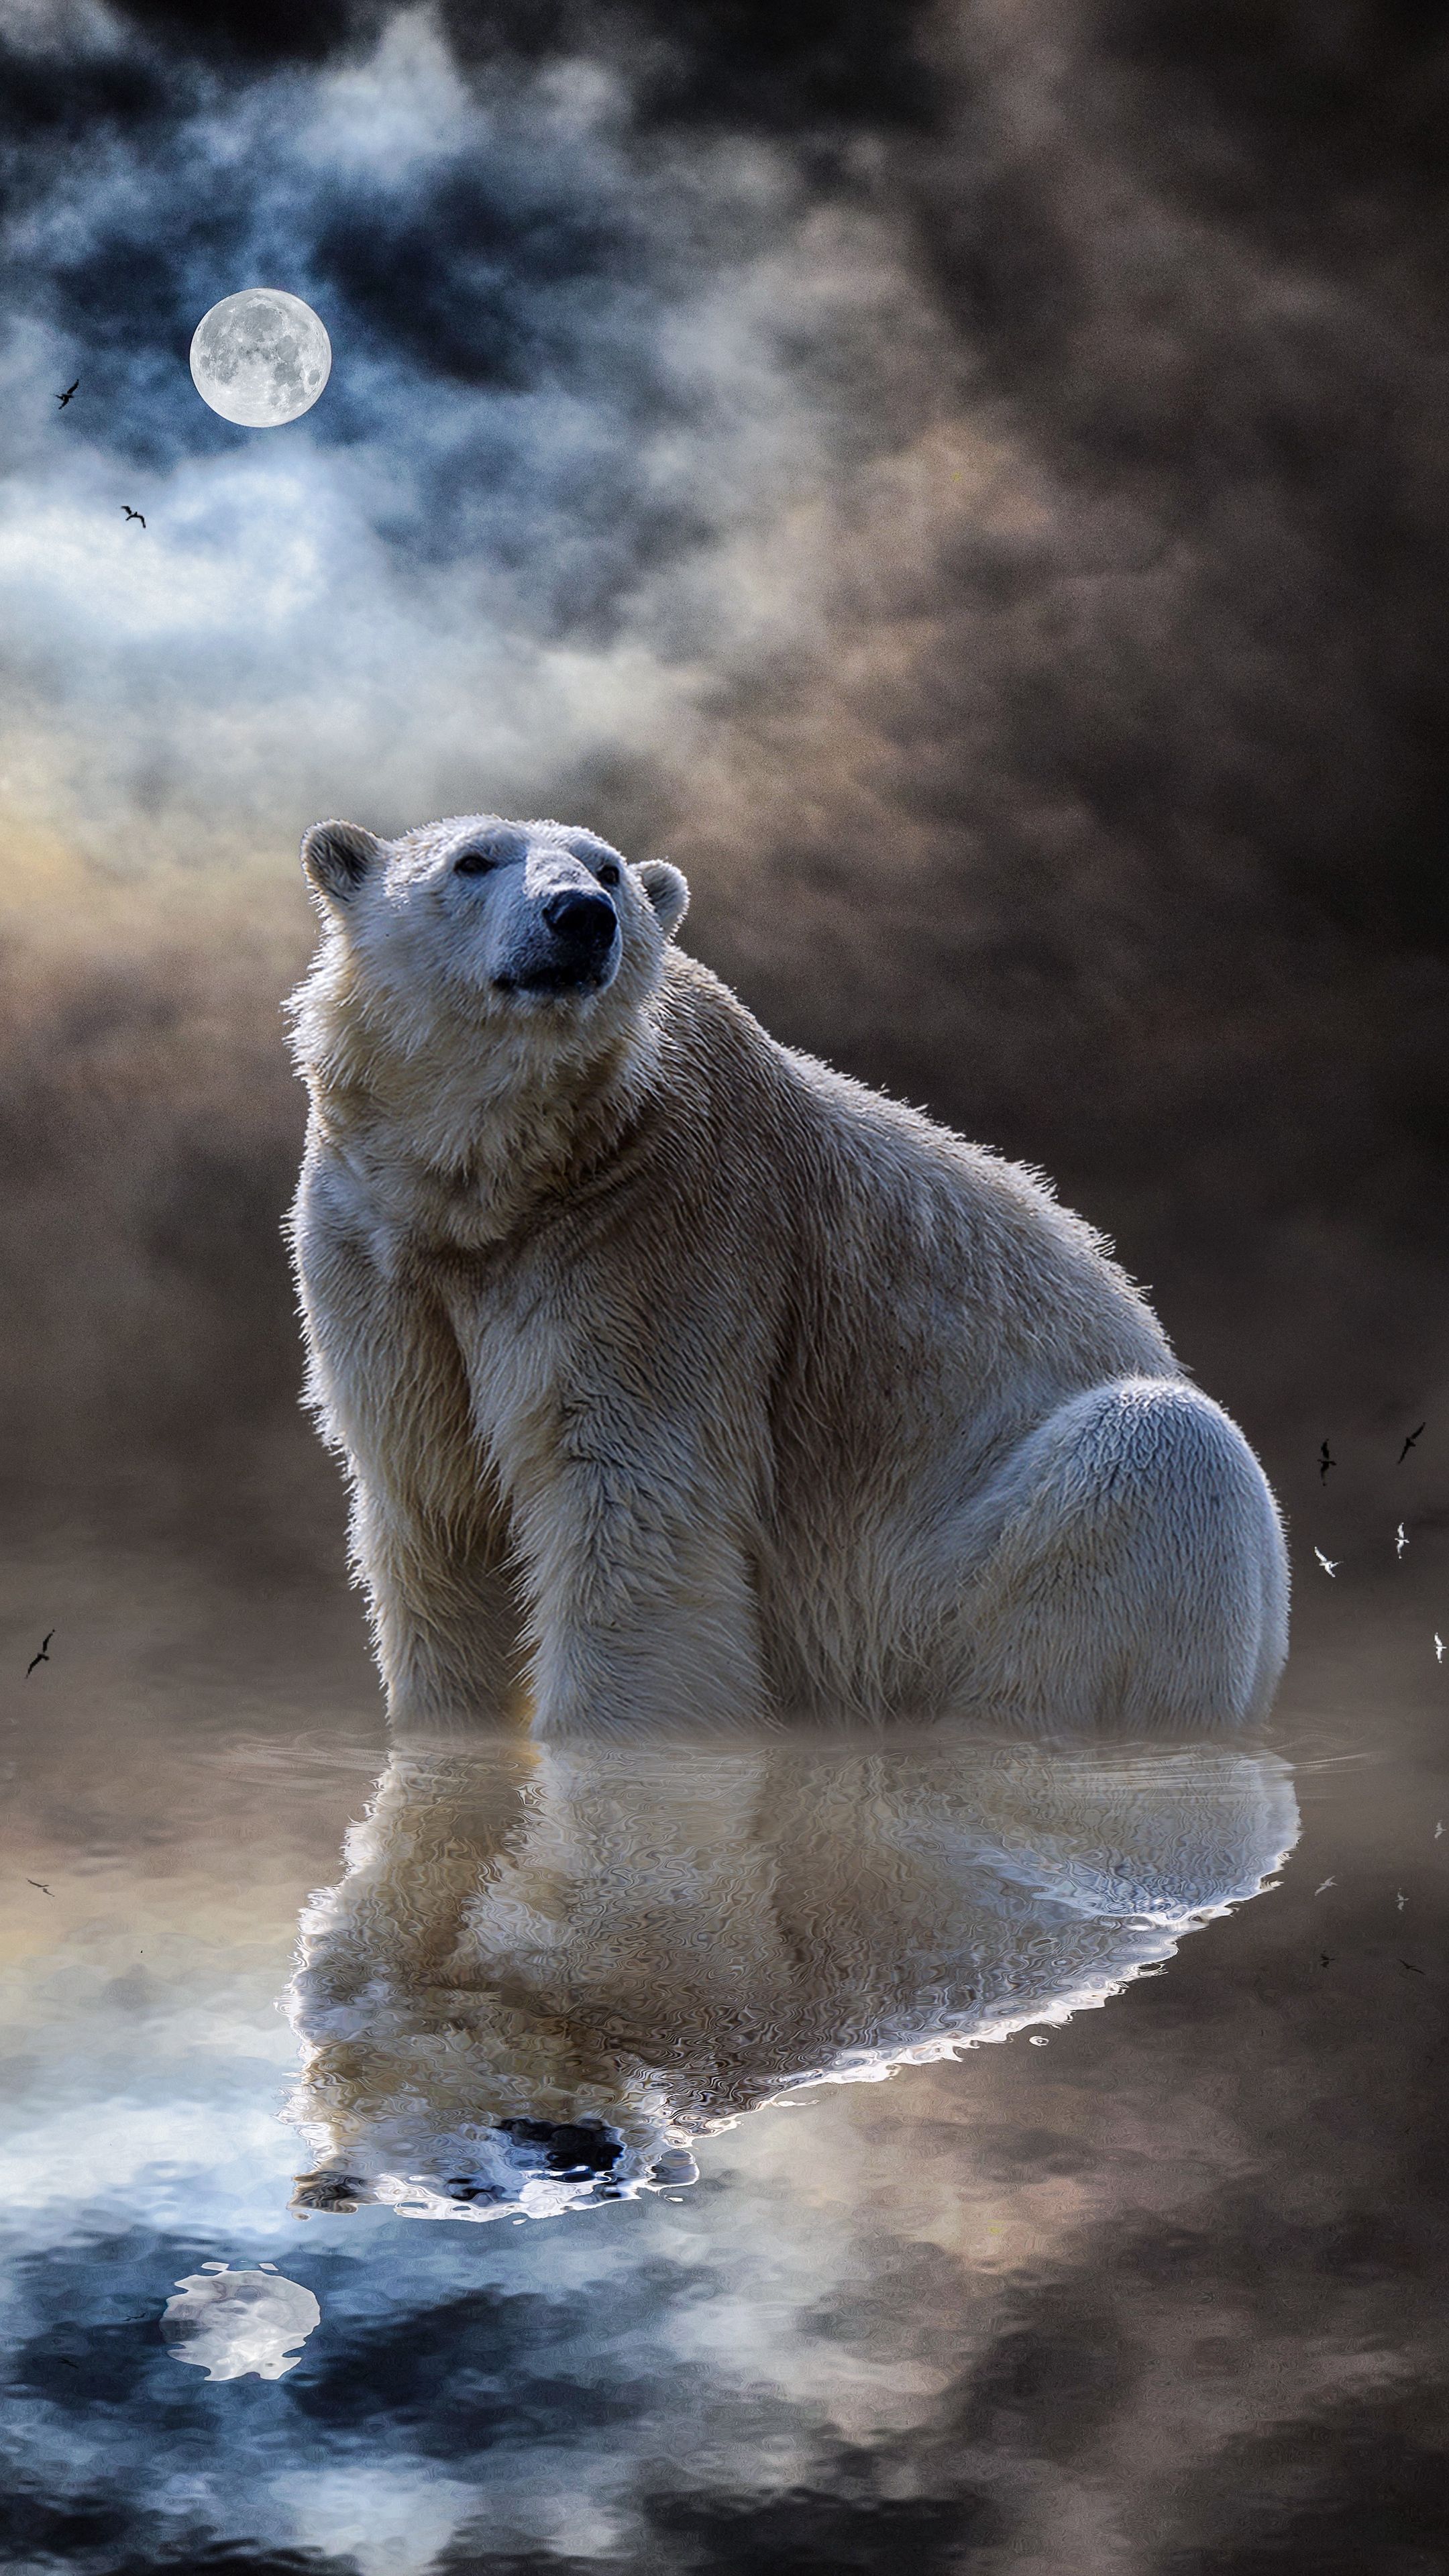 Animals #polarbear #ocean #reflection #wallpaper HD 4k background for android :). Polar bear wallpaper, Save the polar bears, Polar bear